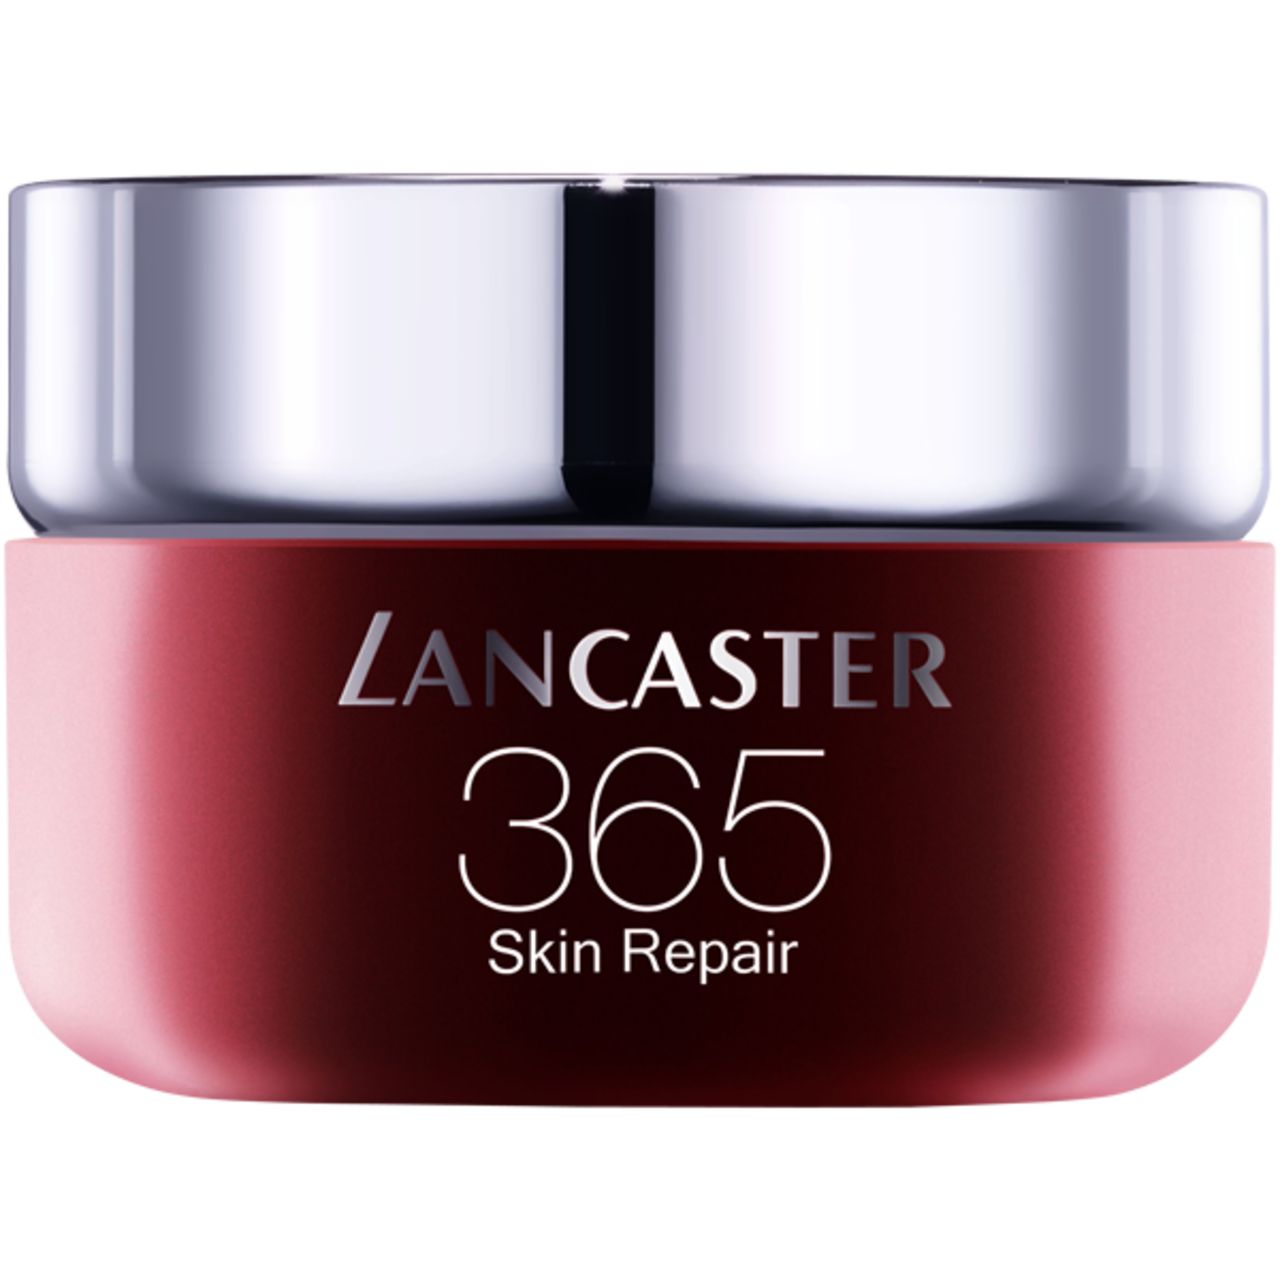 Lancaster, 365 Cellular Elixir Skin Repair Rich Day Cream SPF 15